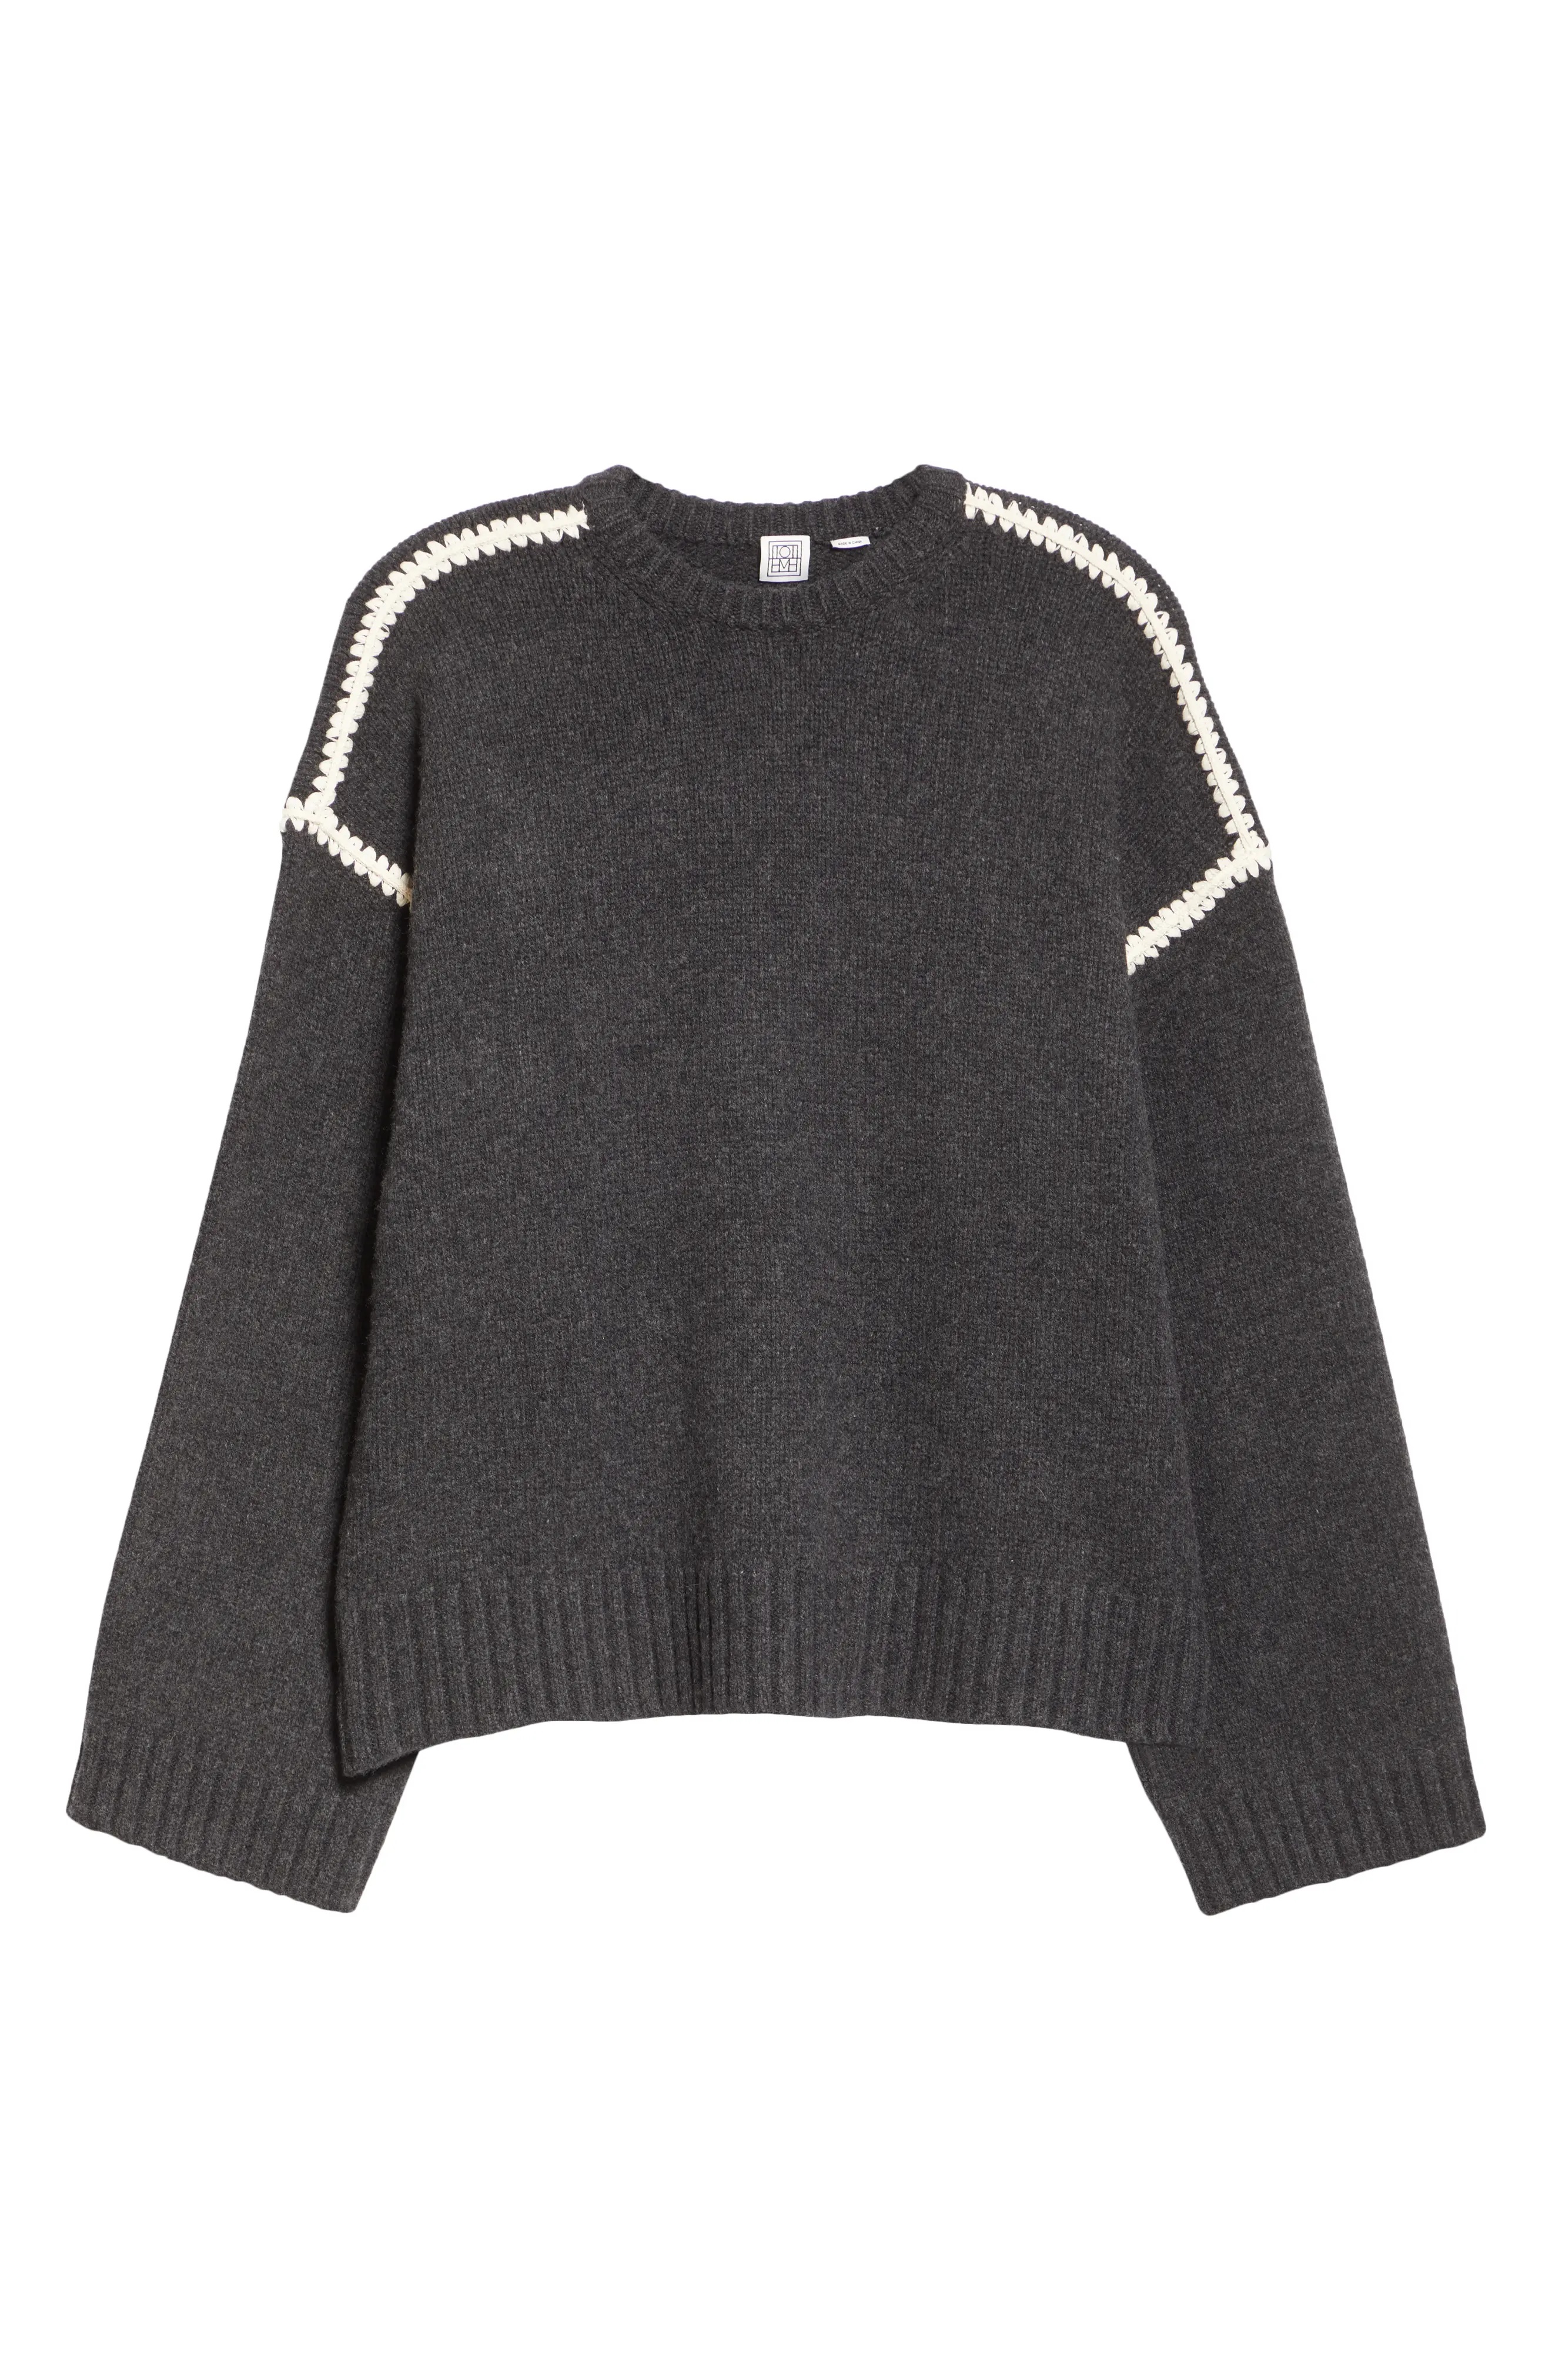 Shell Stitch Trim Wool, Cashmere & Cotton Sweater - 6